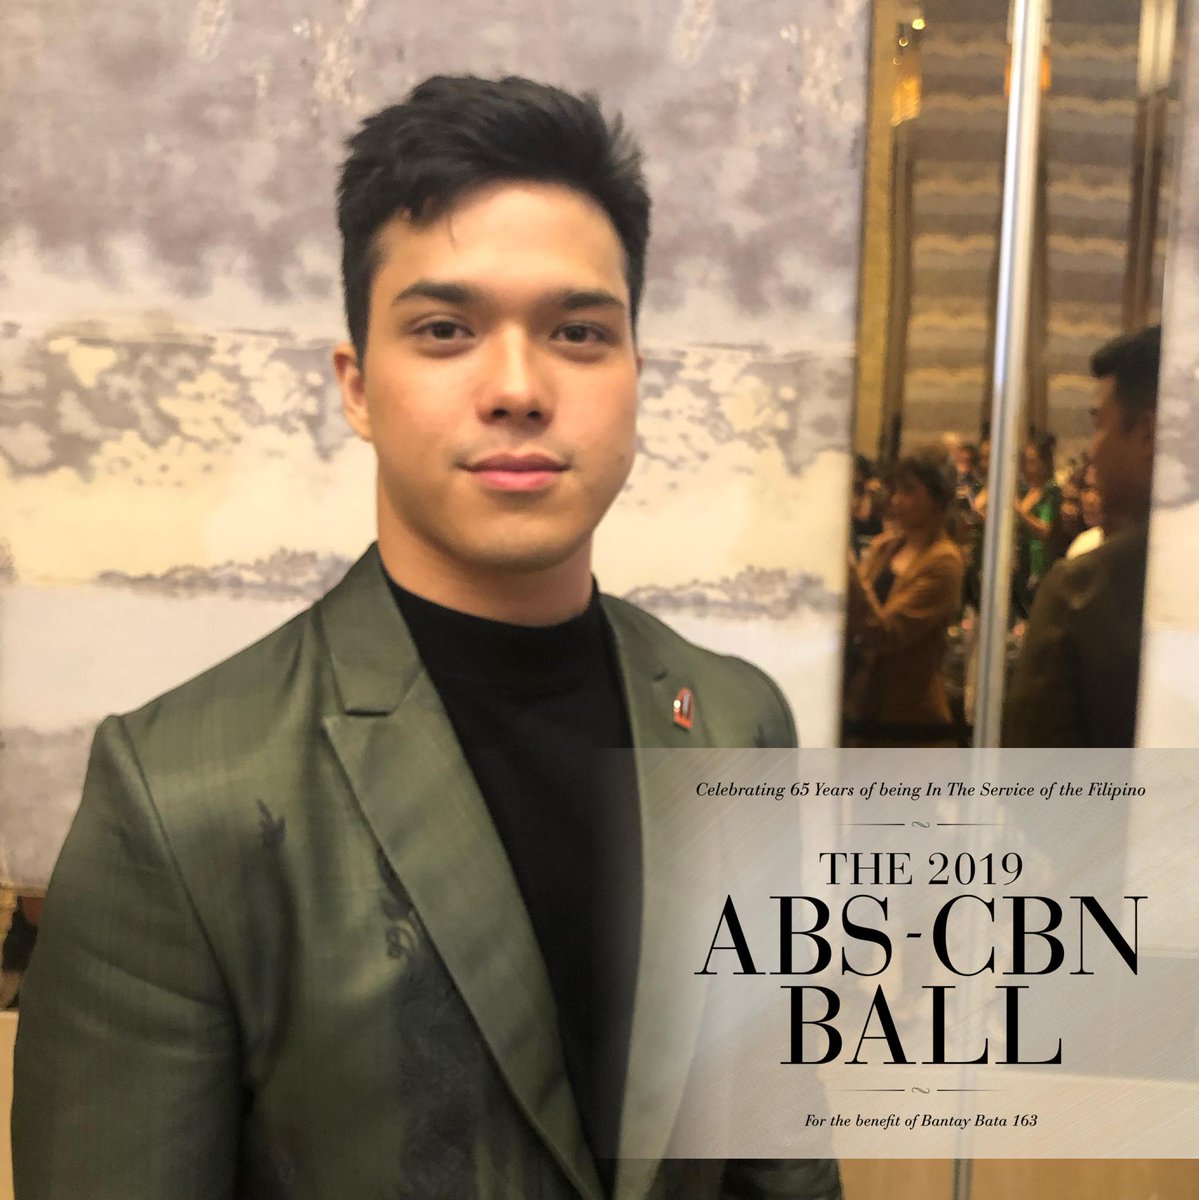 Elmo Magalona #ABSCBNBall2019 #StarMagicXBantayBata -- The ABS-CBN Ball is dedicated to support Bantay Bata 163’s Education Program. For more updates, visit ABSCBNBall.com